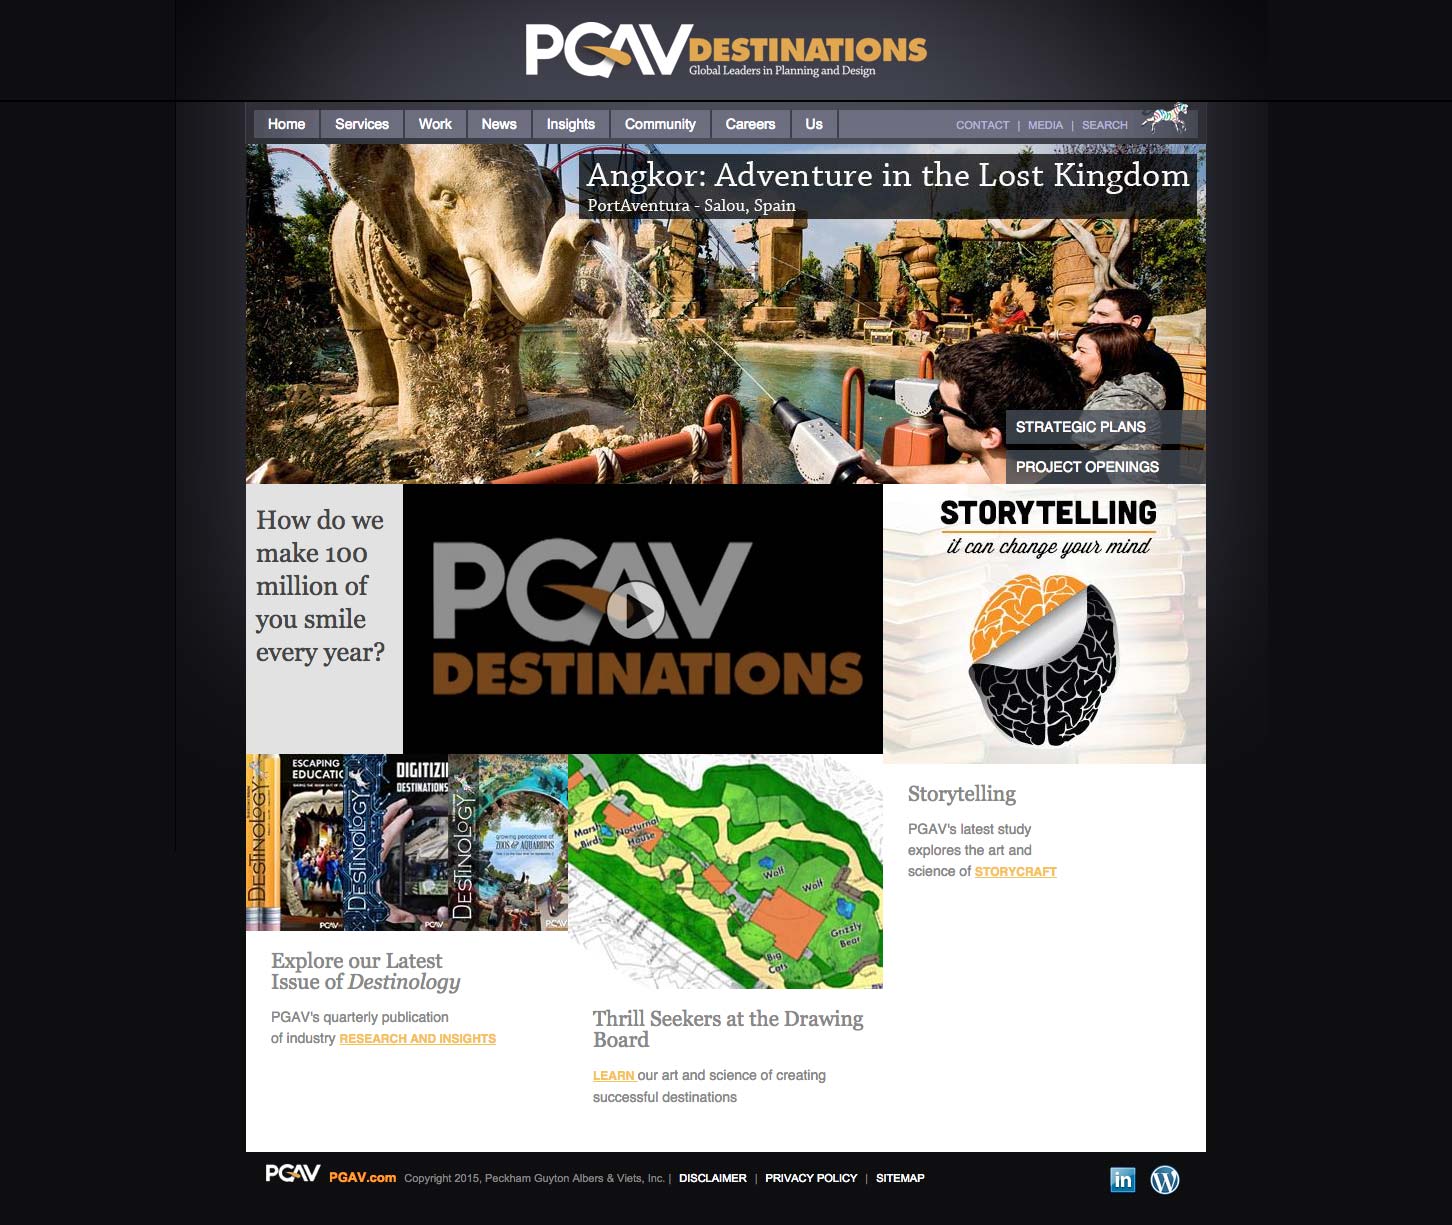 Previous Website Design for PGAV